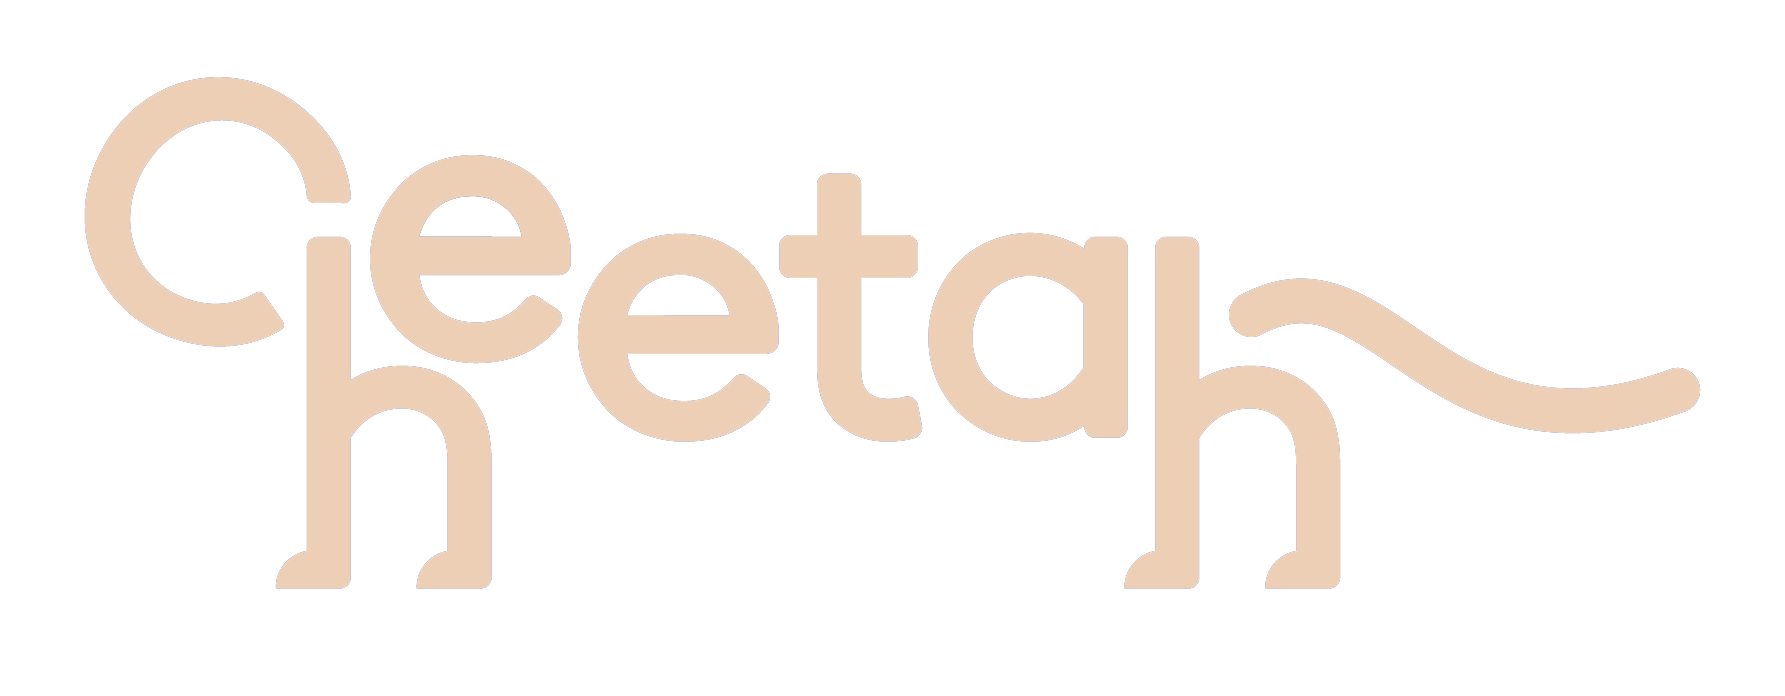 cheetah-logo.png